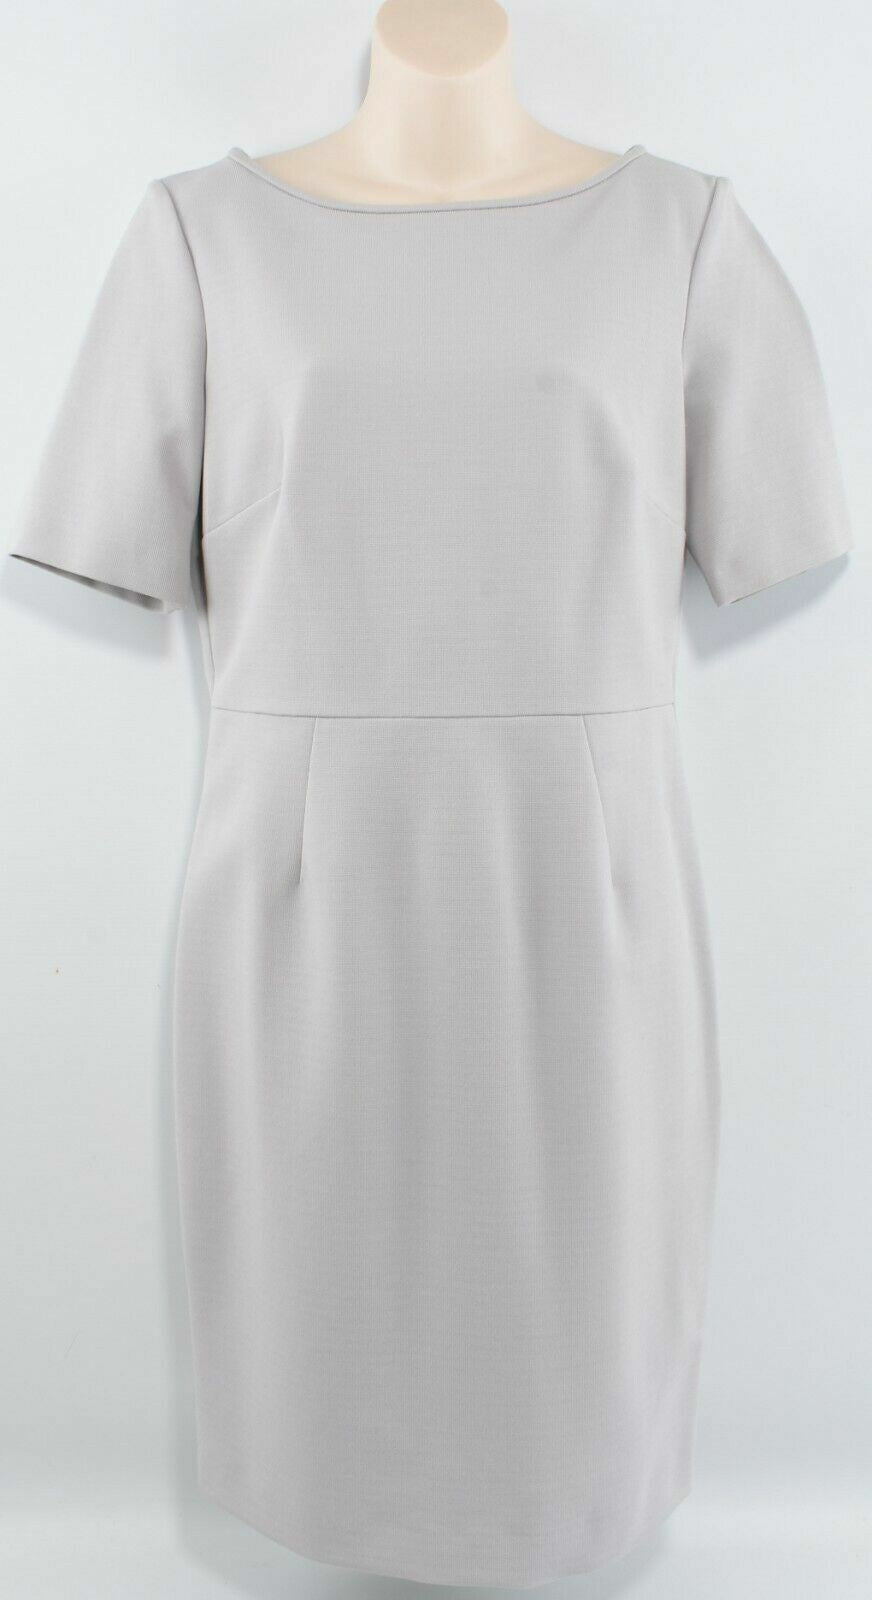 EMPORIO ARMANI Women's Dress, Harbour Grey, size UK 12 / IT 44